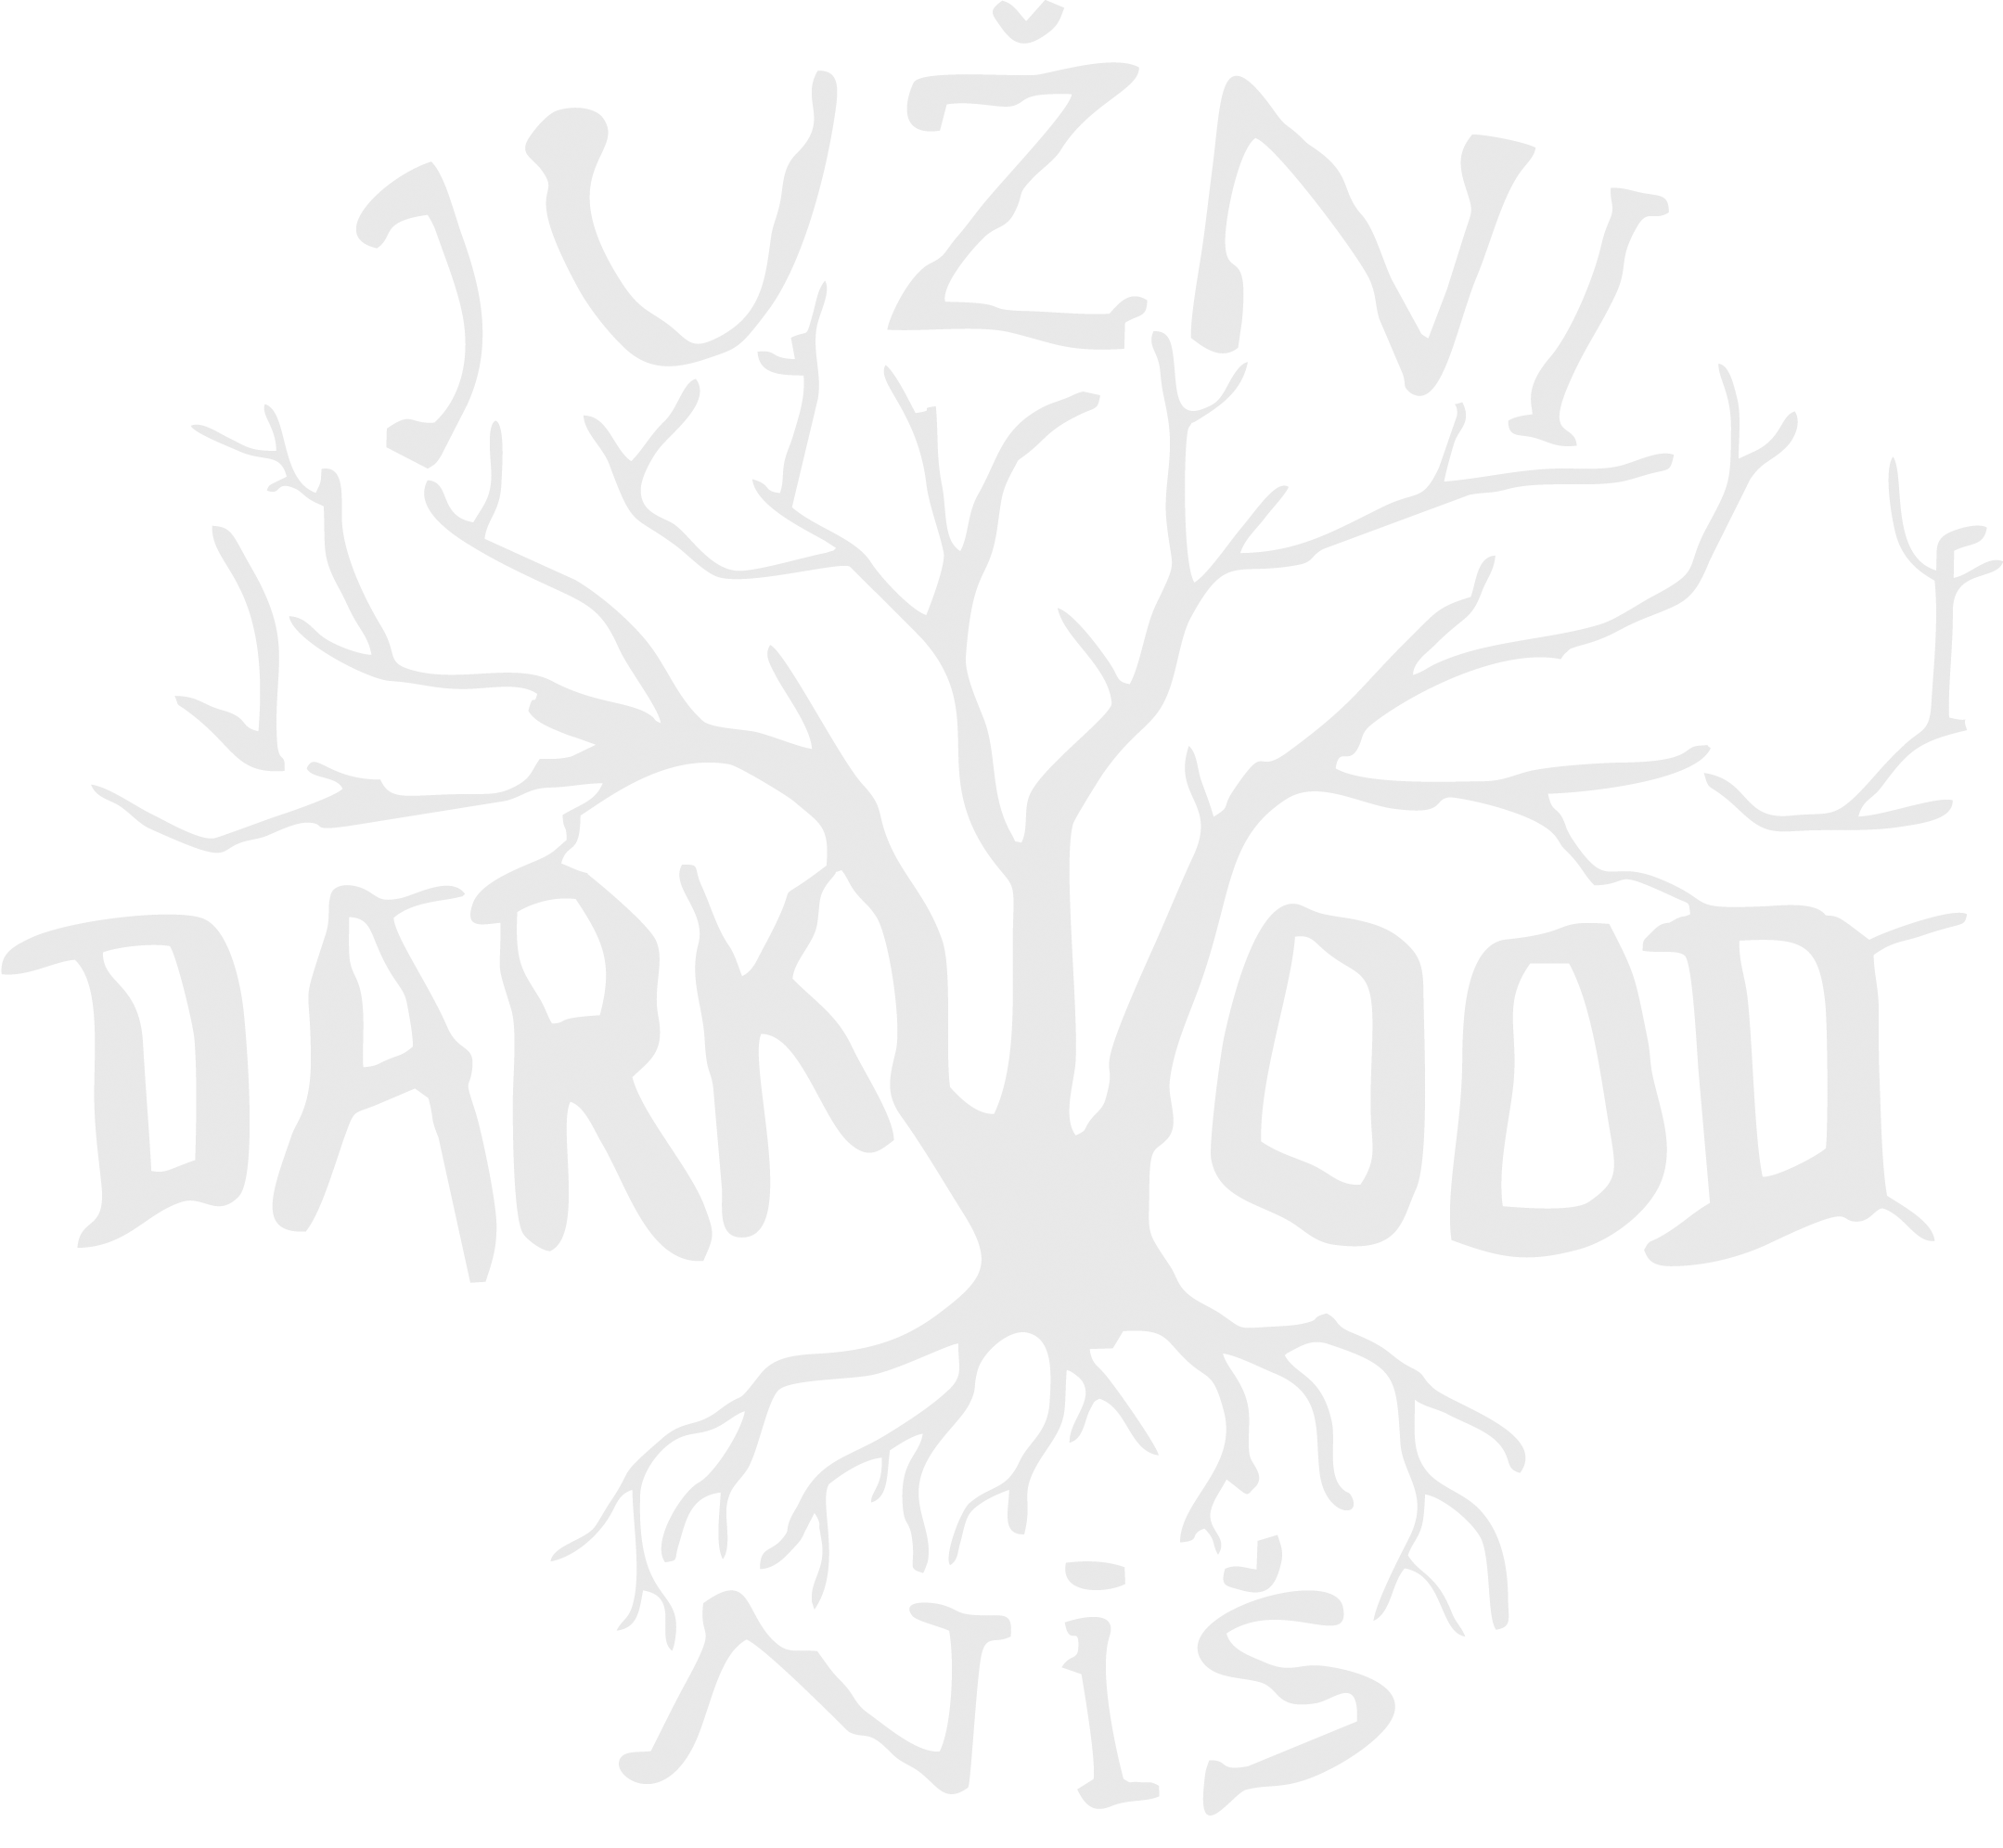 Juzni Darkwood